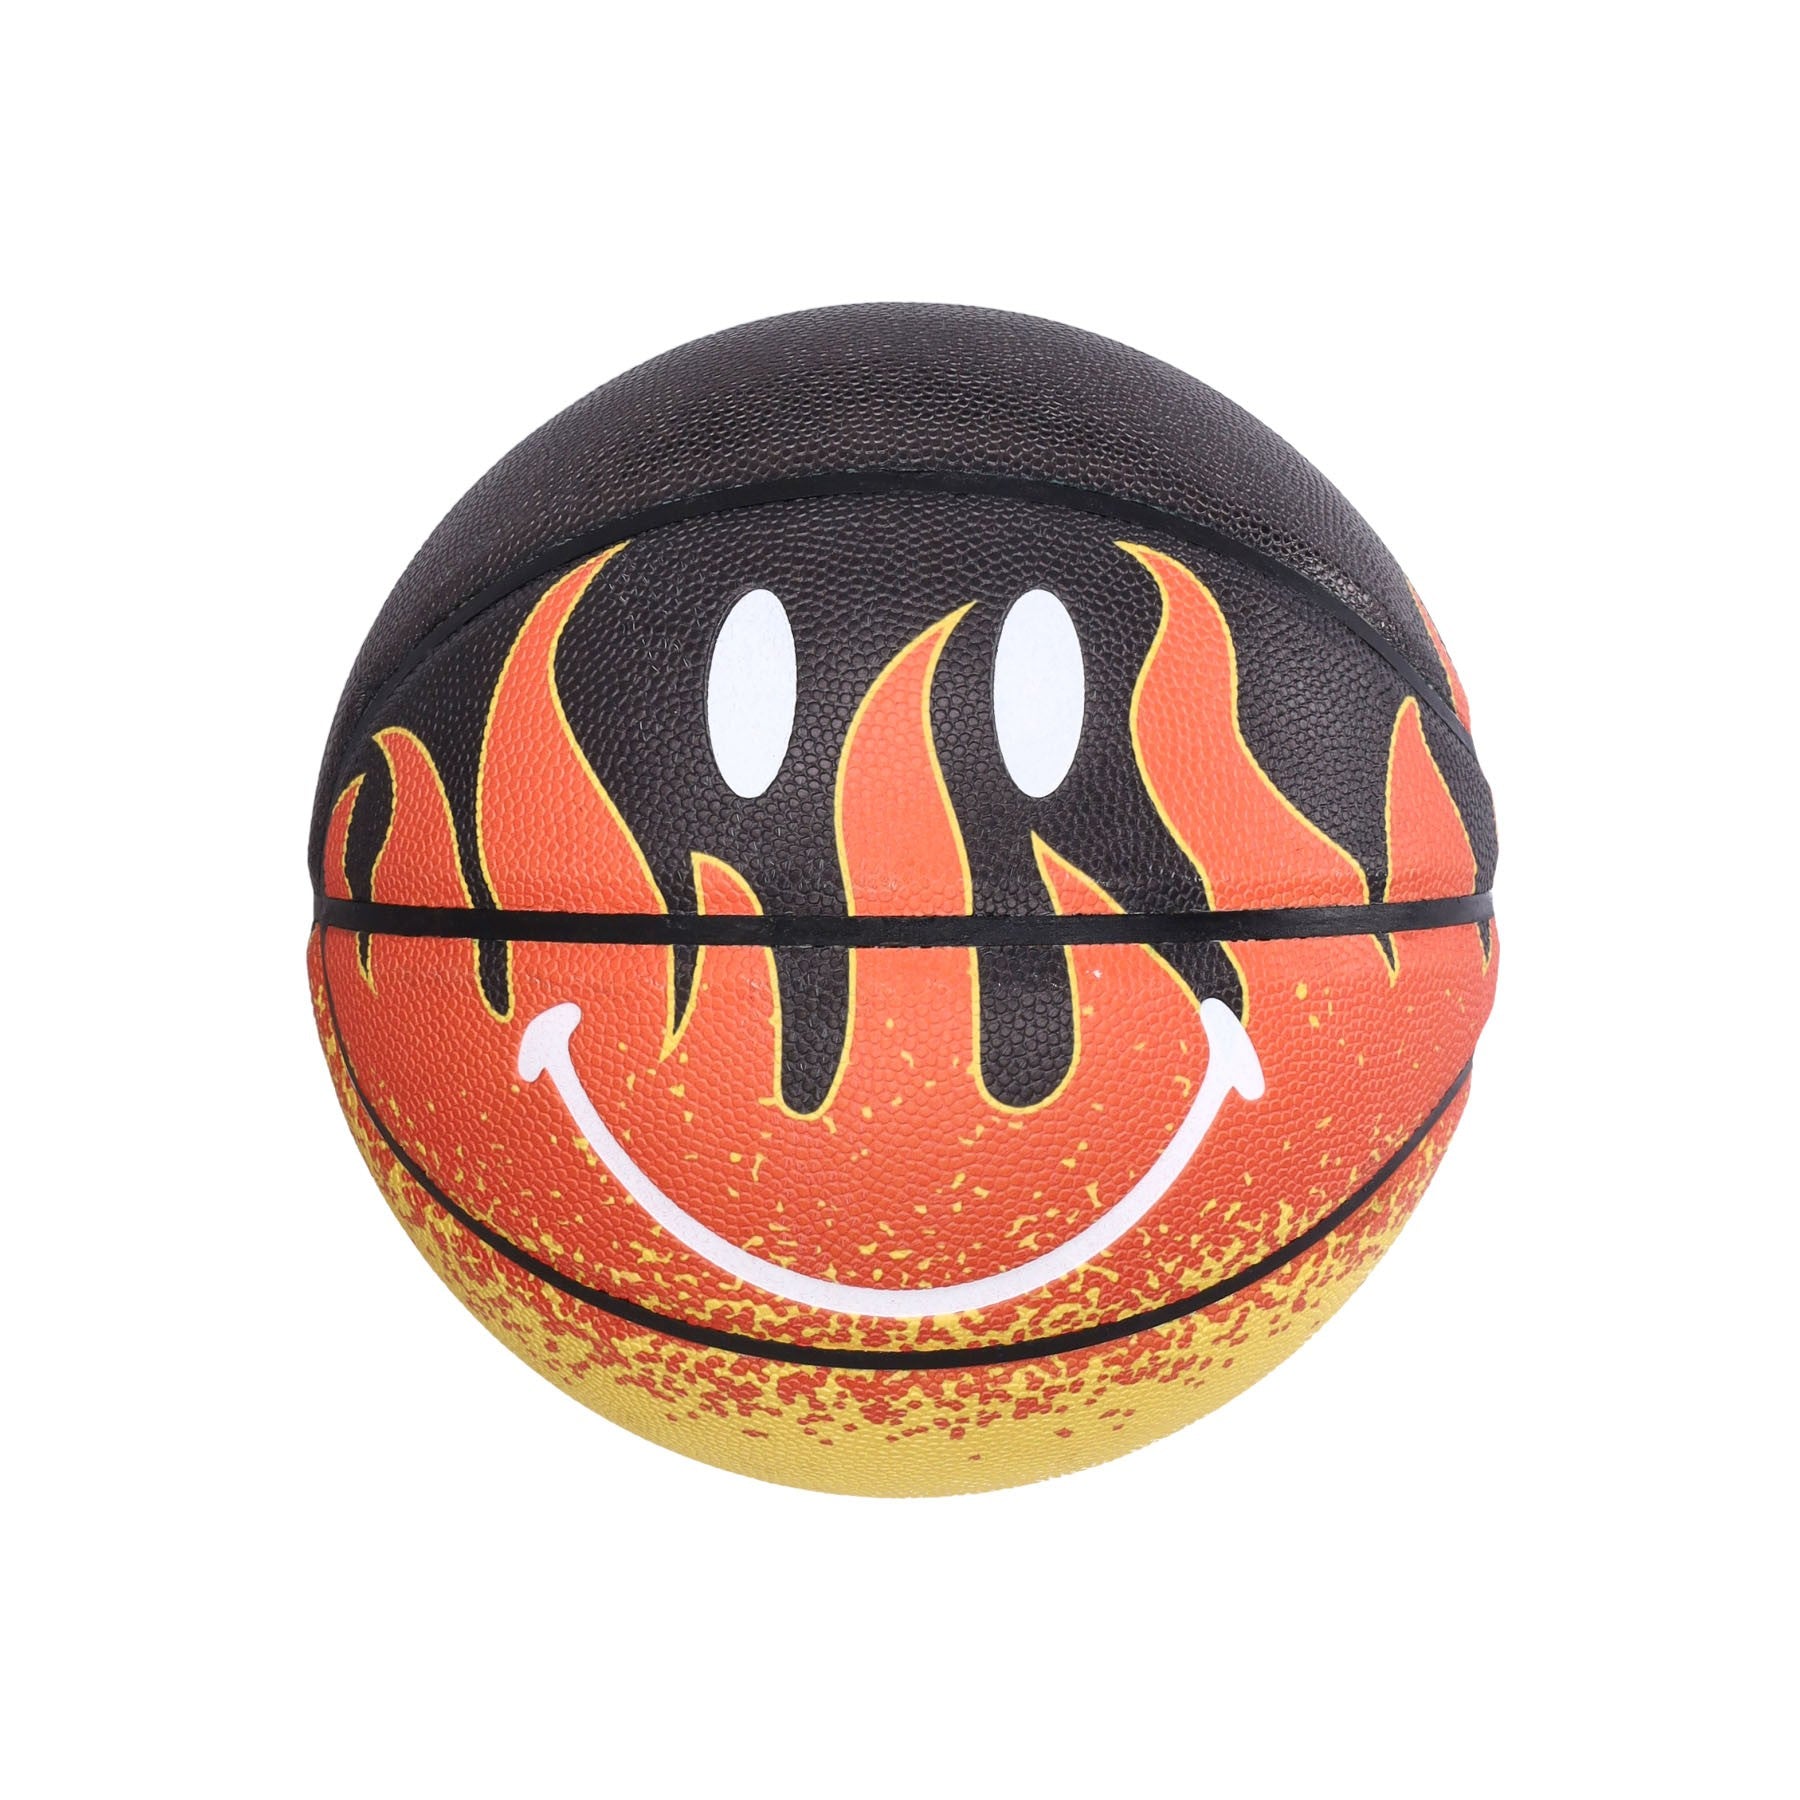 Market, Pallone Uomo Market Flame Basketball Size 7 X Smiley, Multi